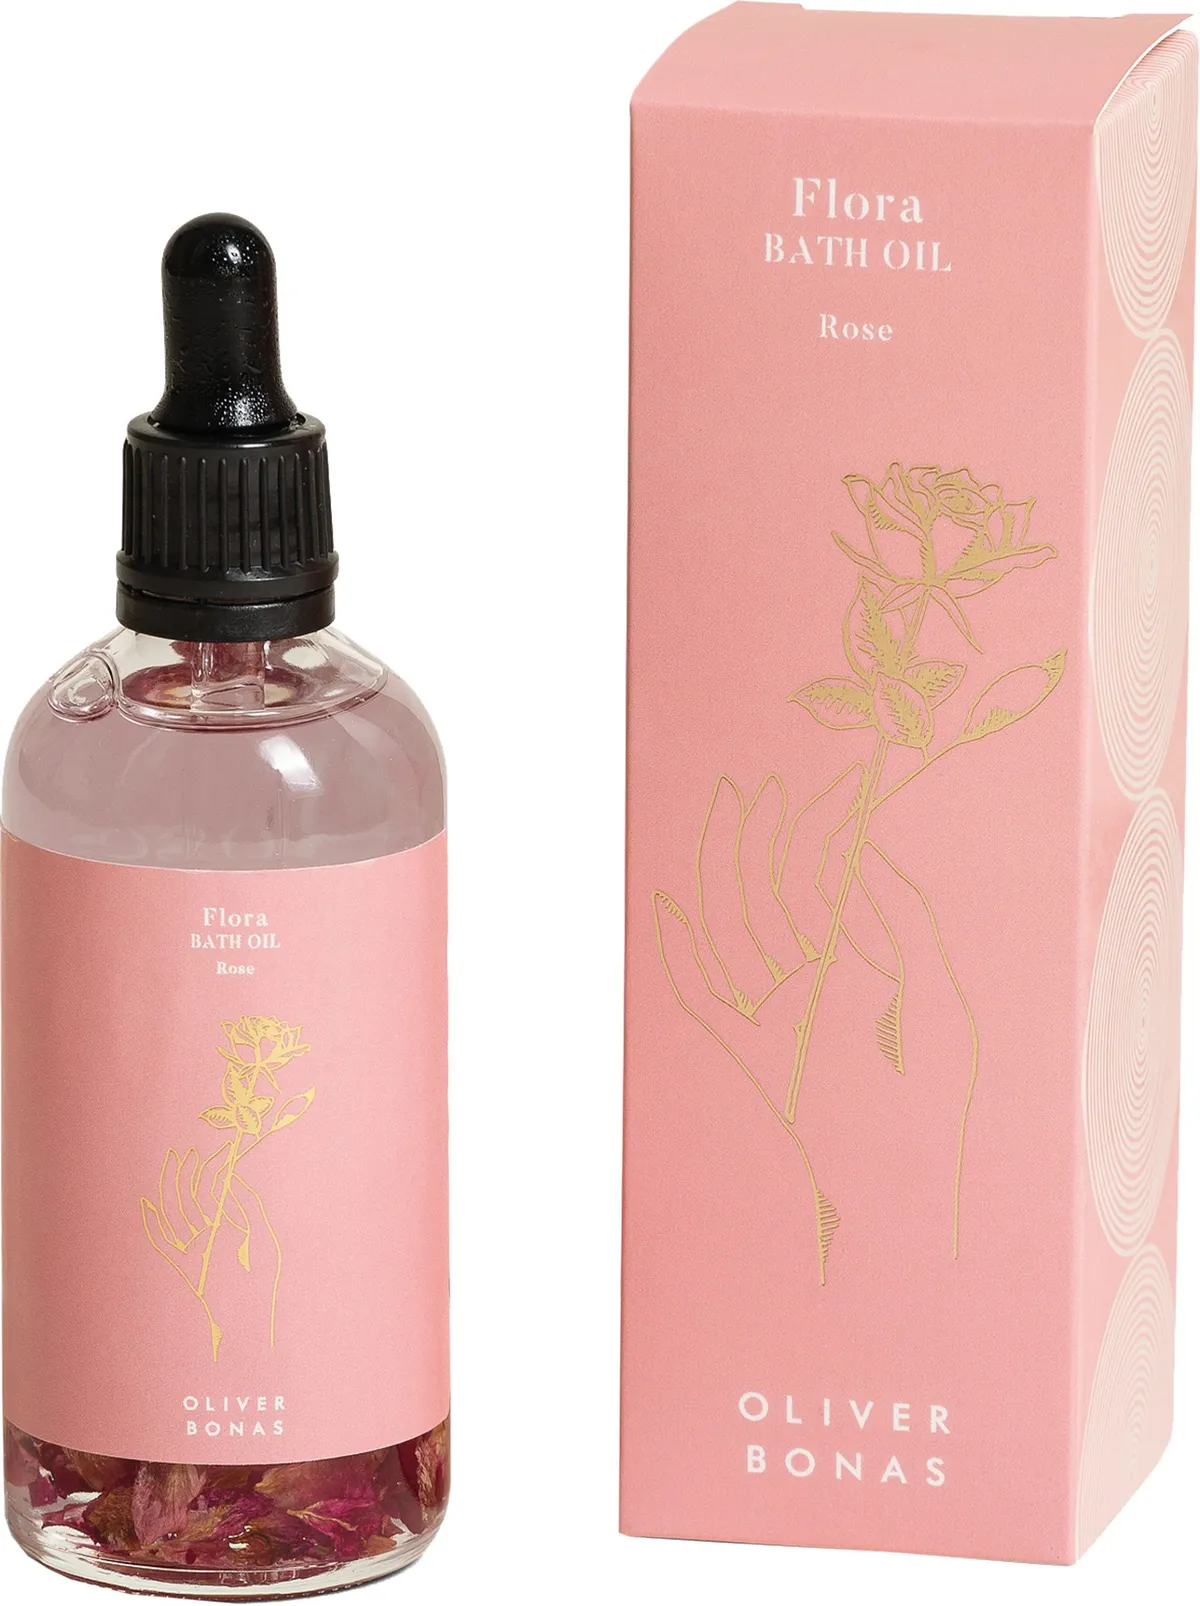 Rose petal bath oil, £9.50, Oliver Bonas